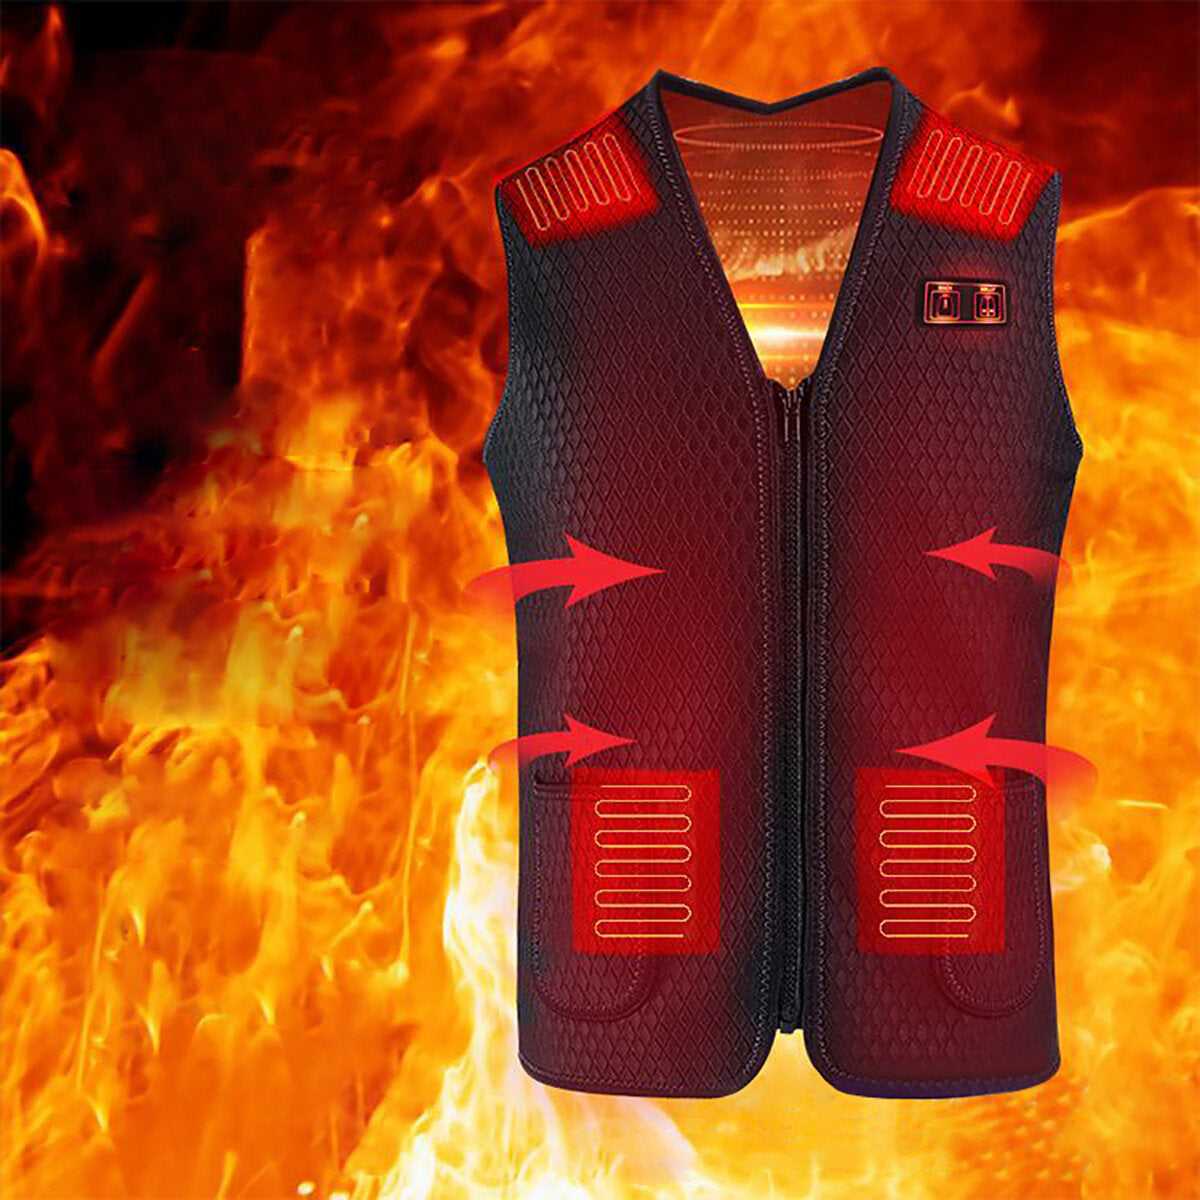 7 Heating Pads Unisex USB Heating Vest Electric Heated Winter Warm Jacket Coat Skiing Outdoor